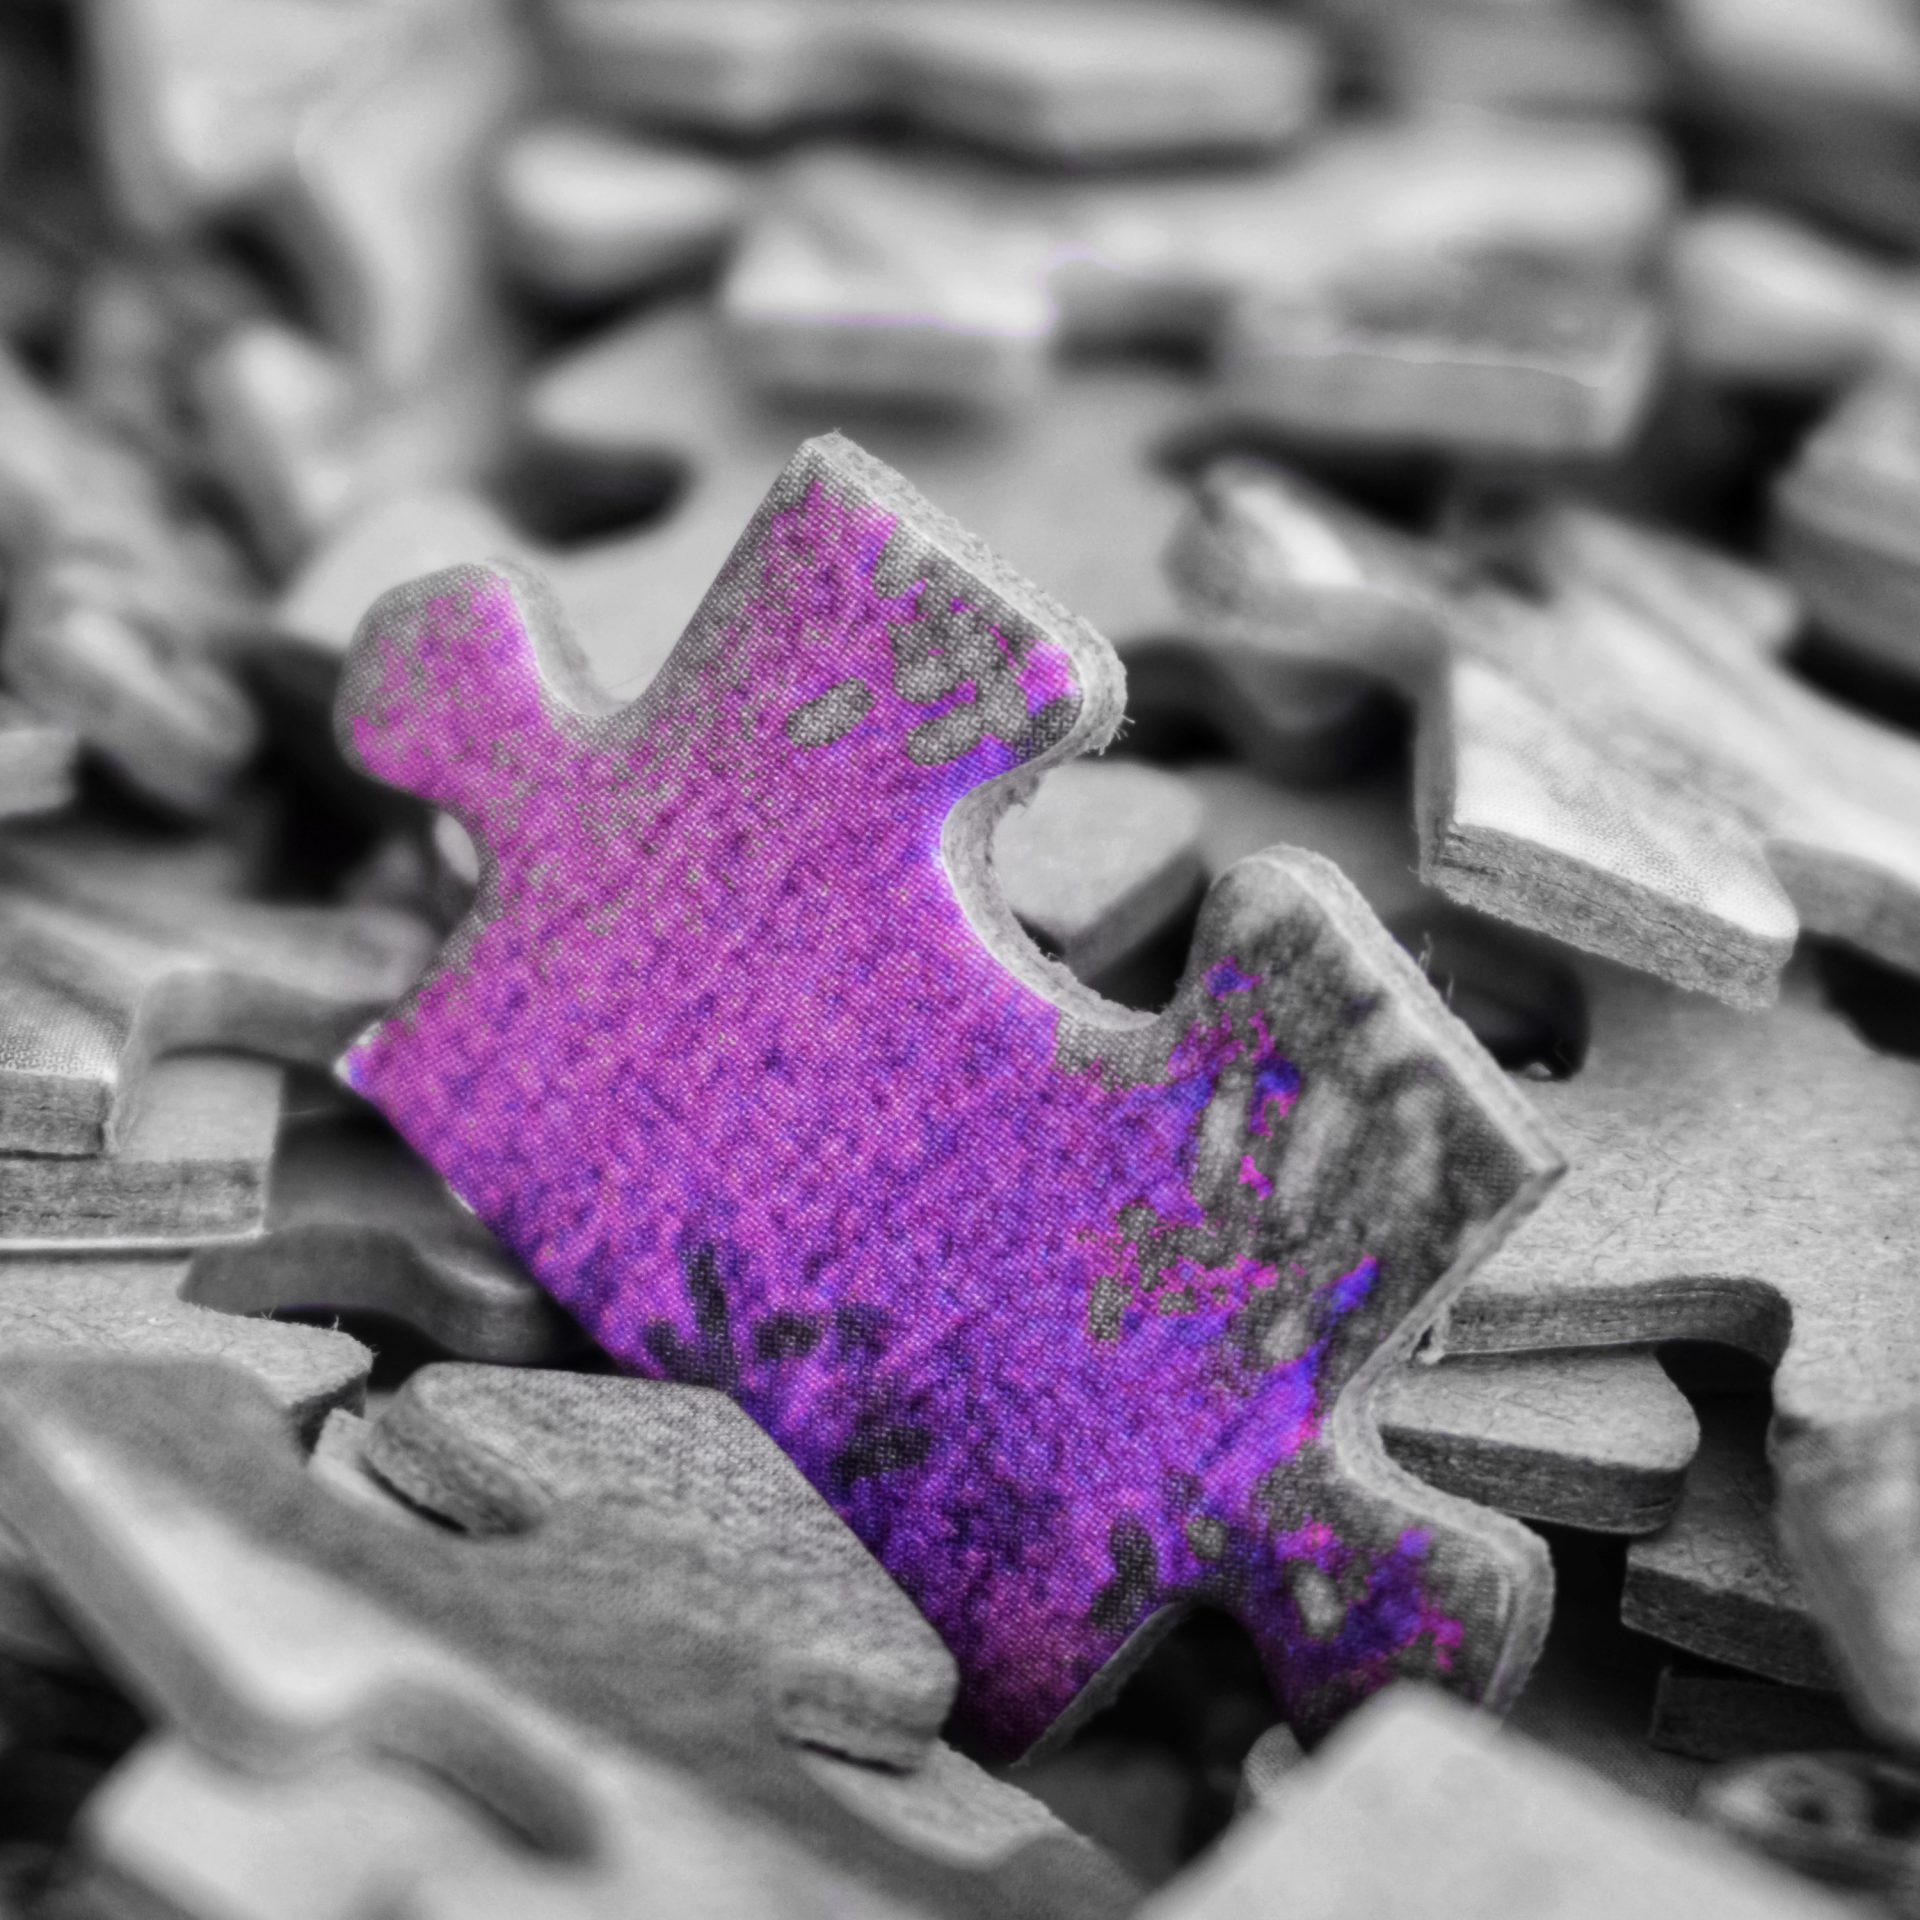 Purple puzzle piece with gray puzzle pieces